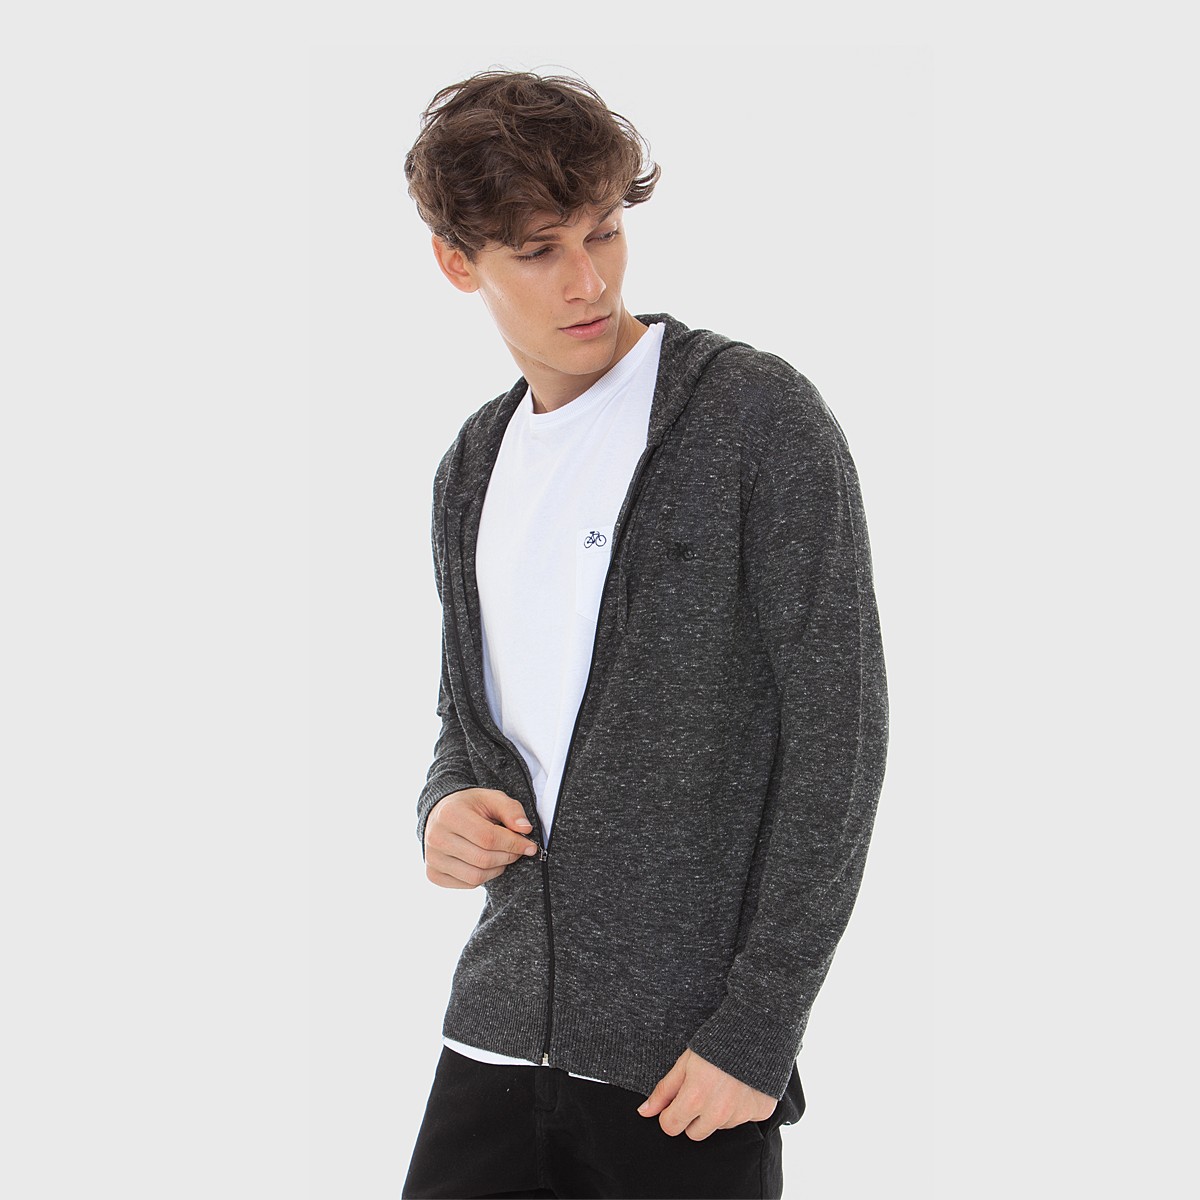 jaqueta tricot masculina